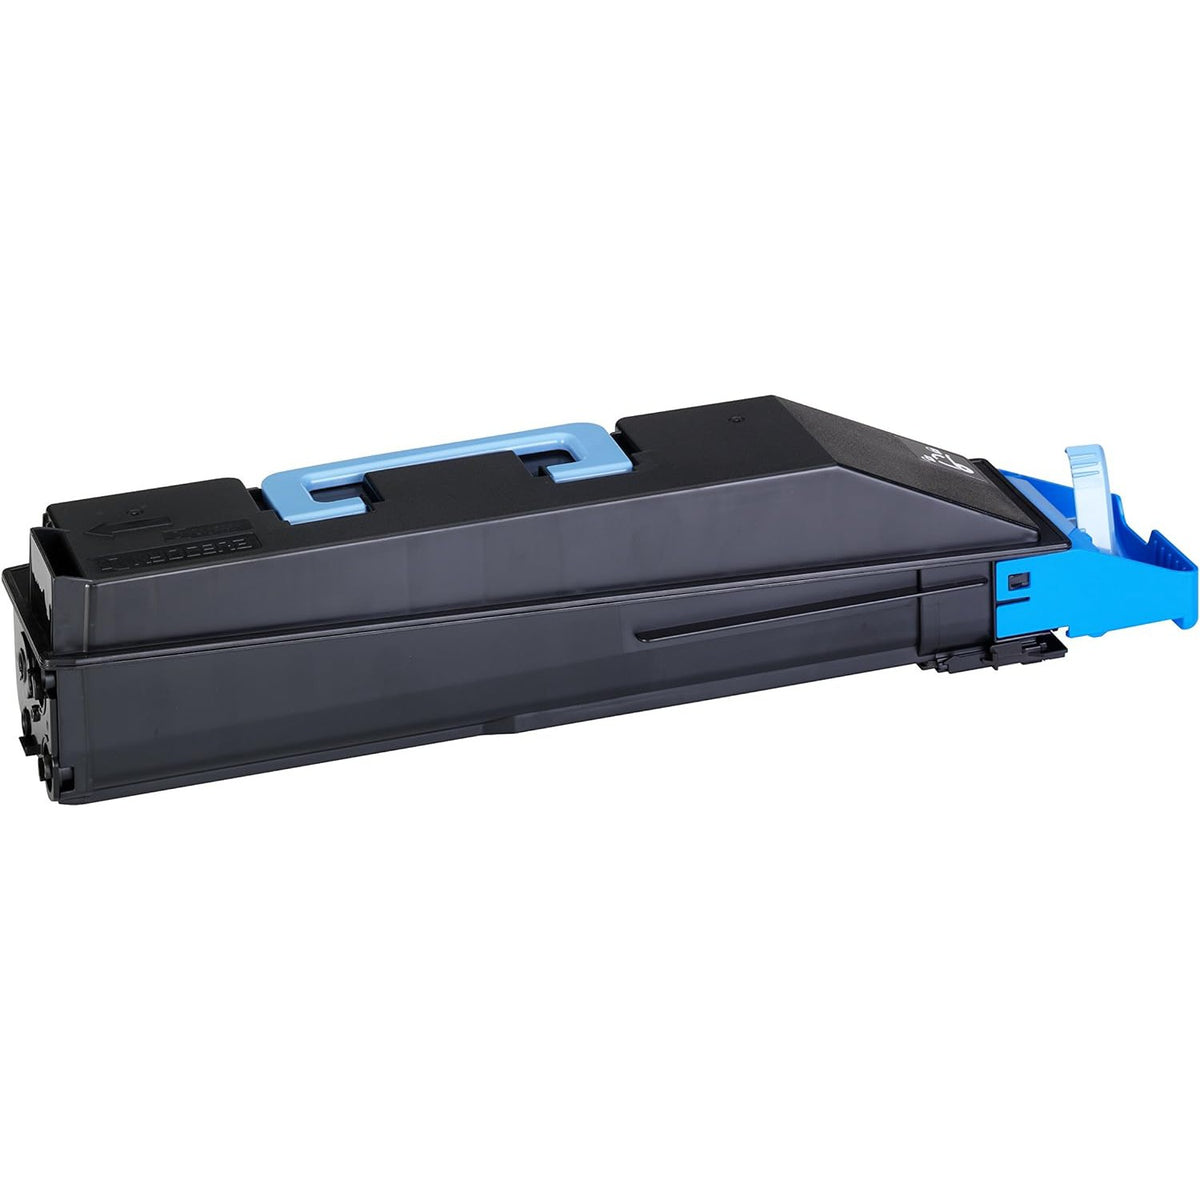 Kyocera TK-865C Cyan For Kyocera TASKalfa 250ci printer